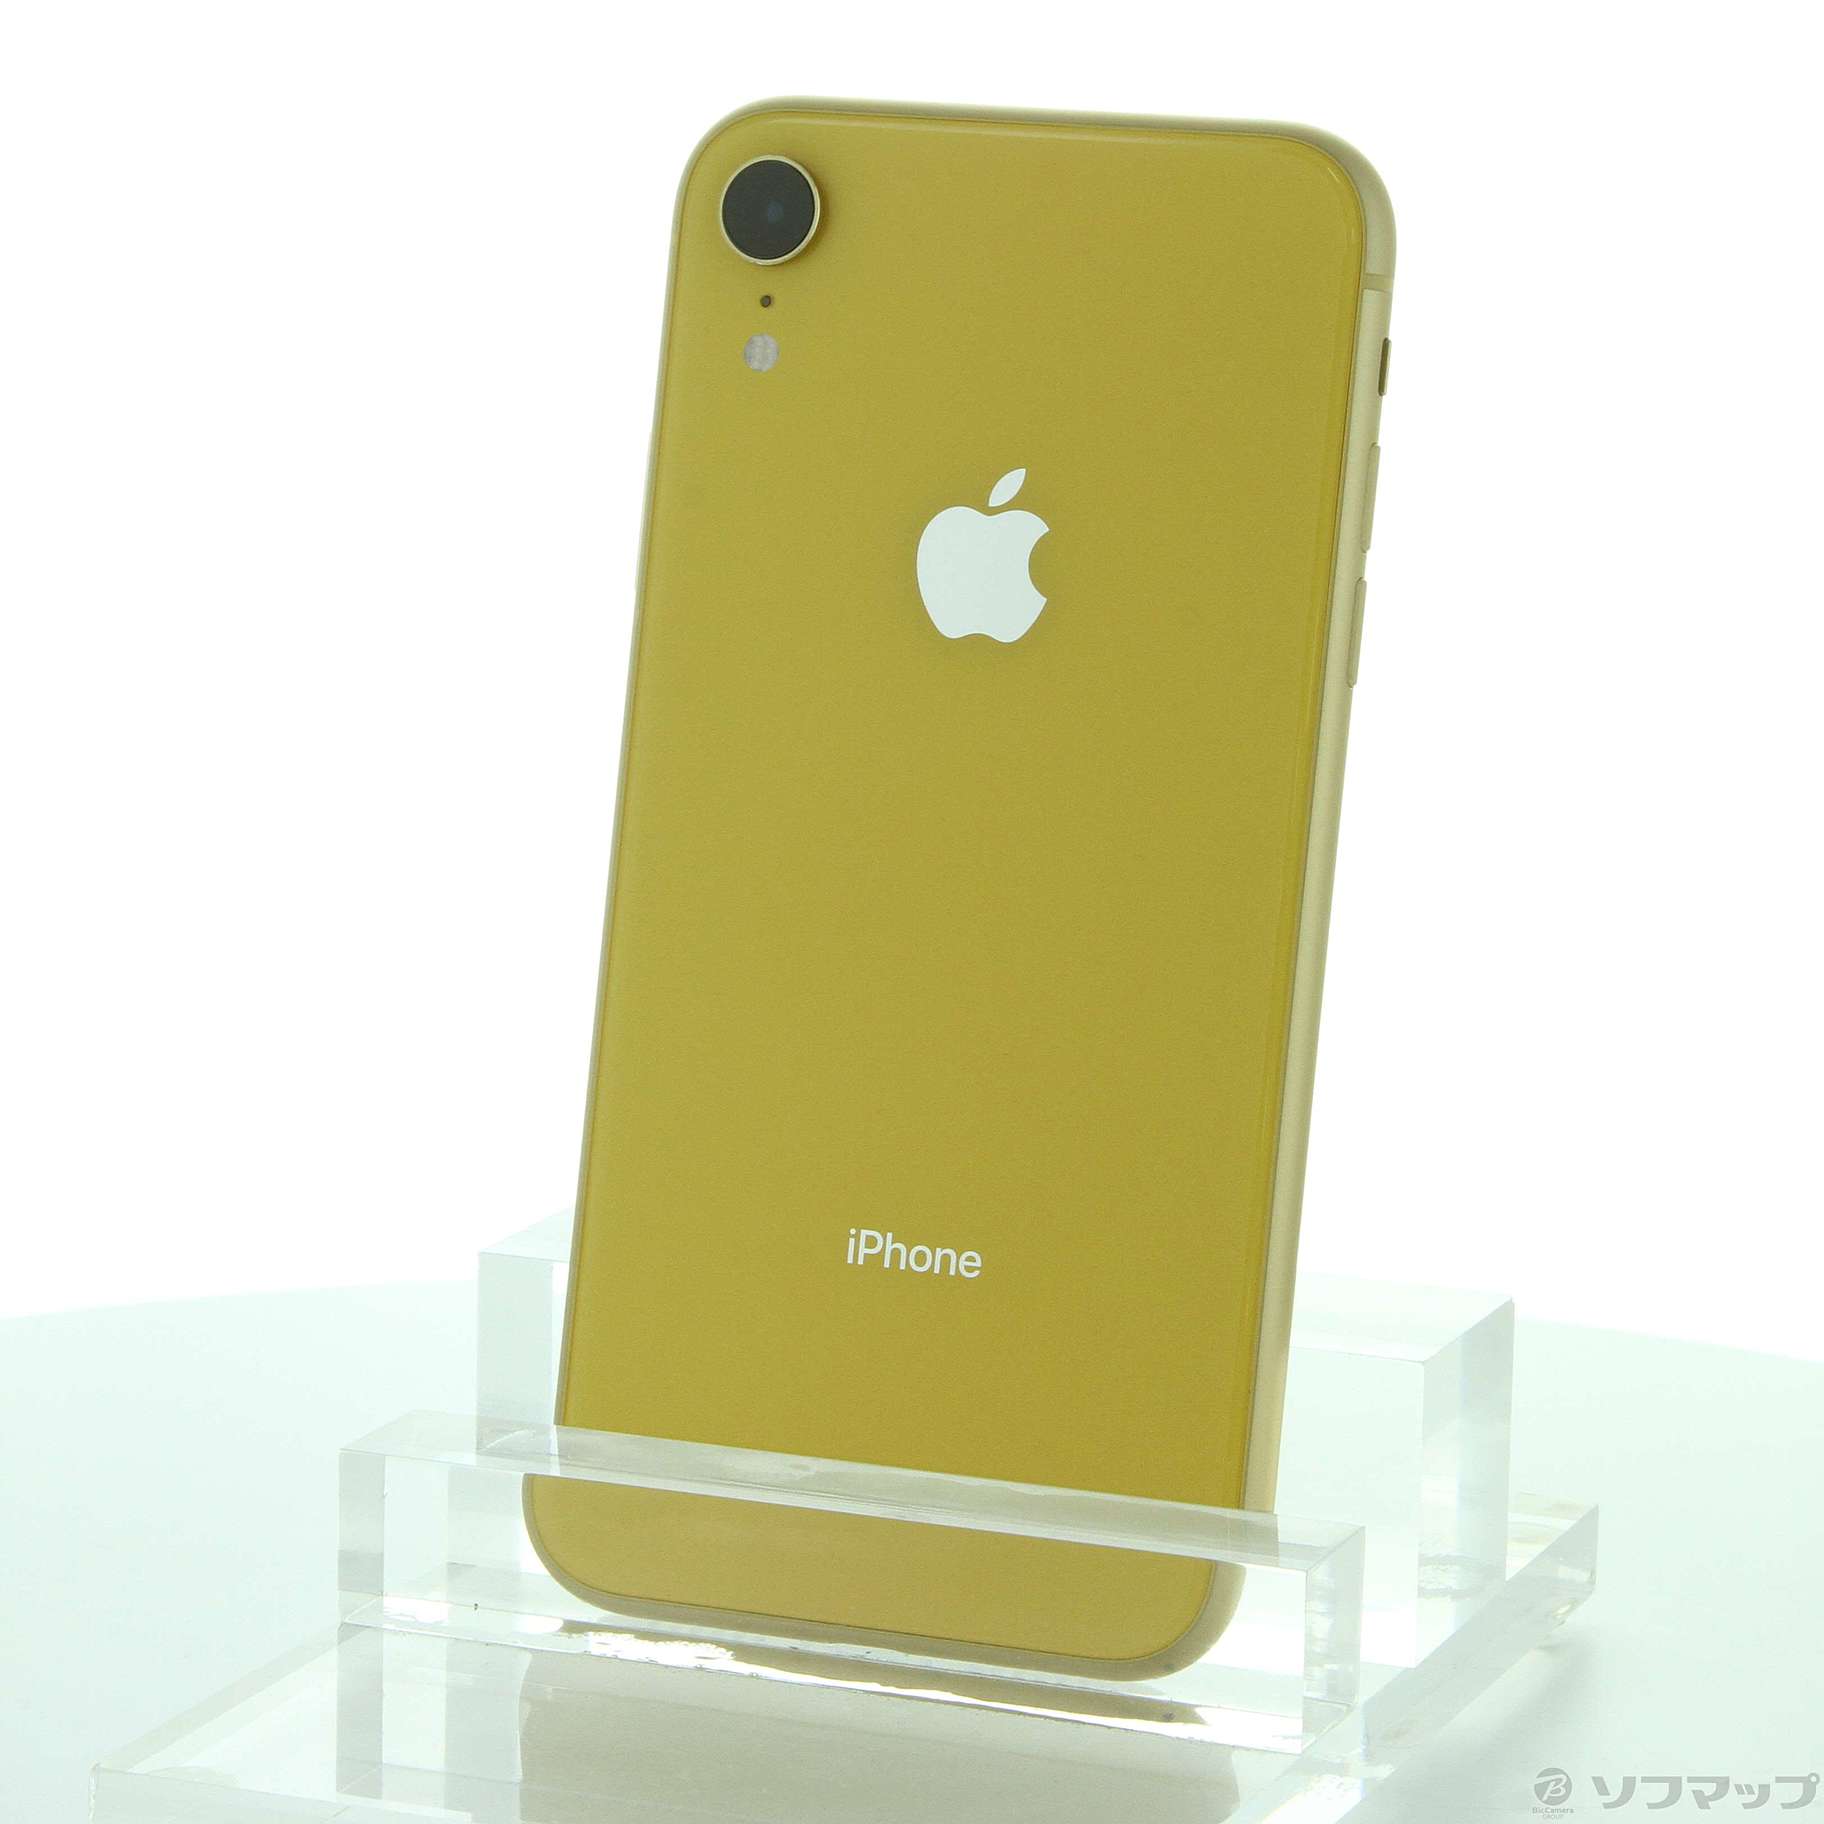 iPhone XR Yellow 64 GB Softbankあります - www.genipabupraia.com.br